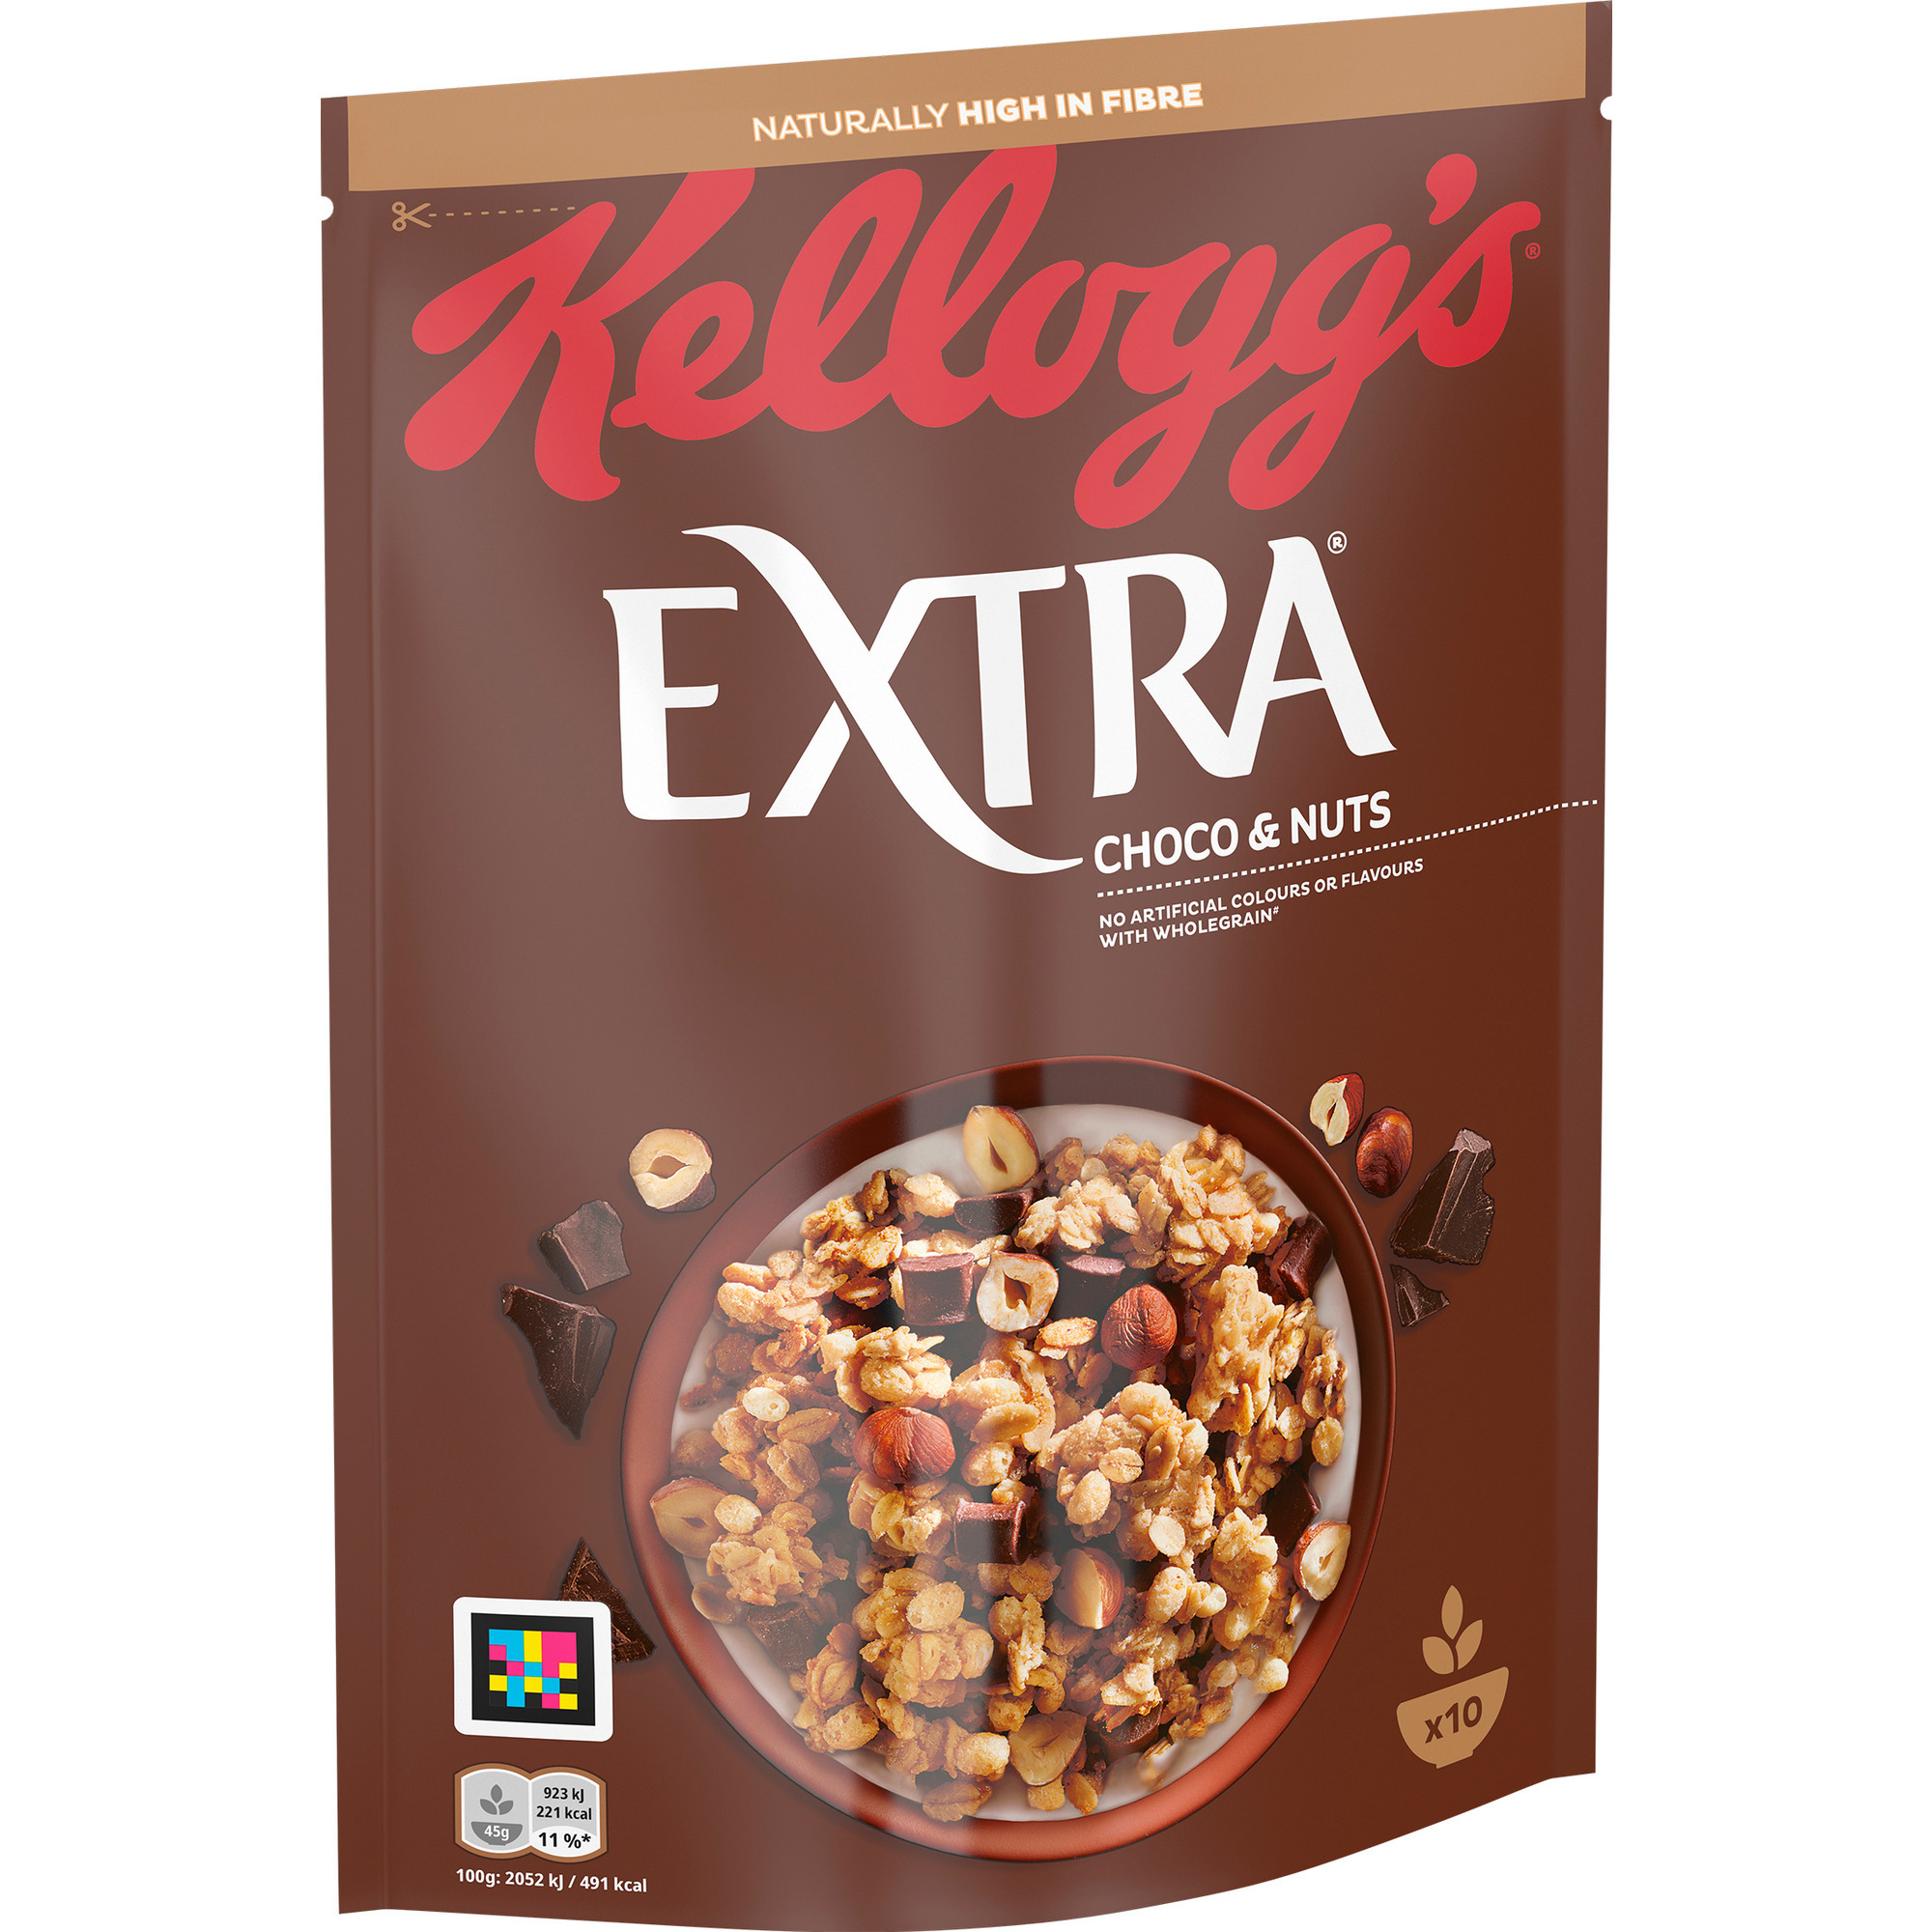 Kelloggs Extra 450g, Choco & Nuts